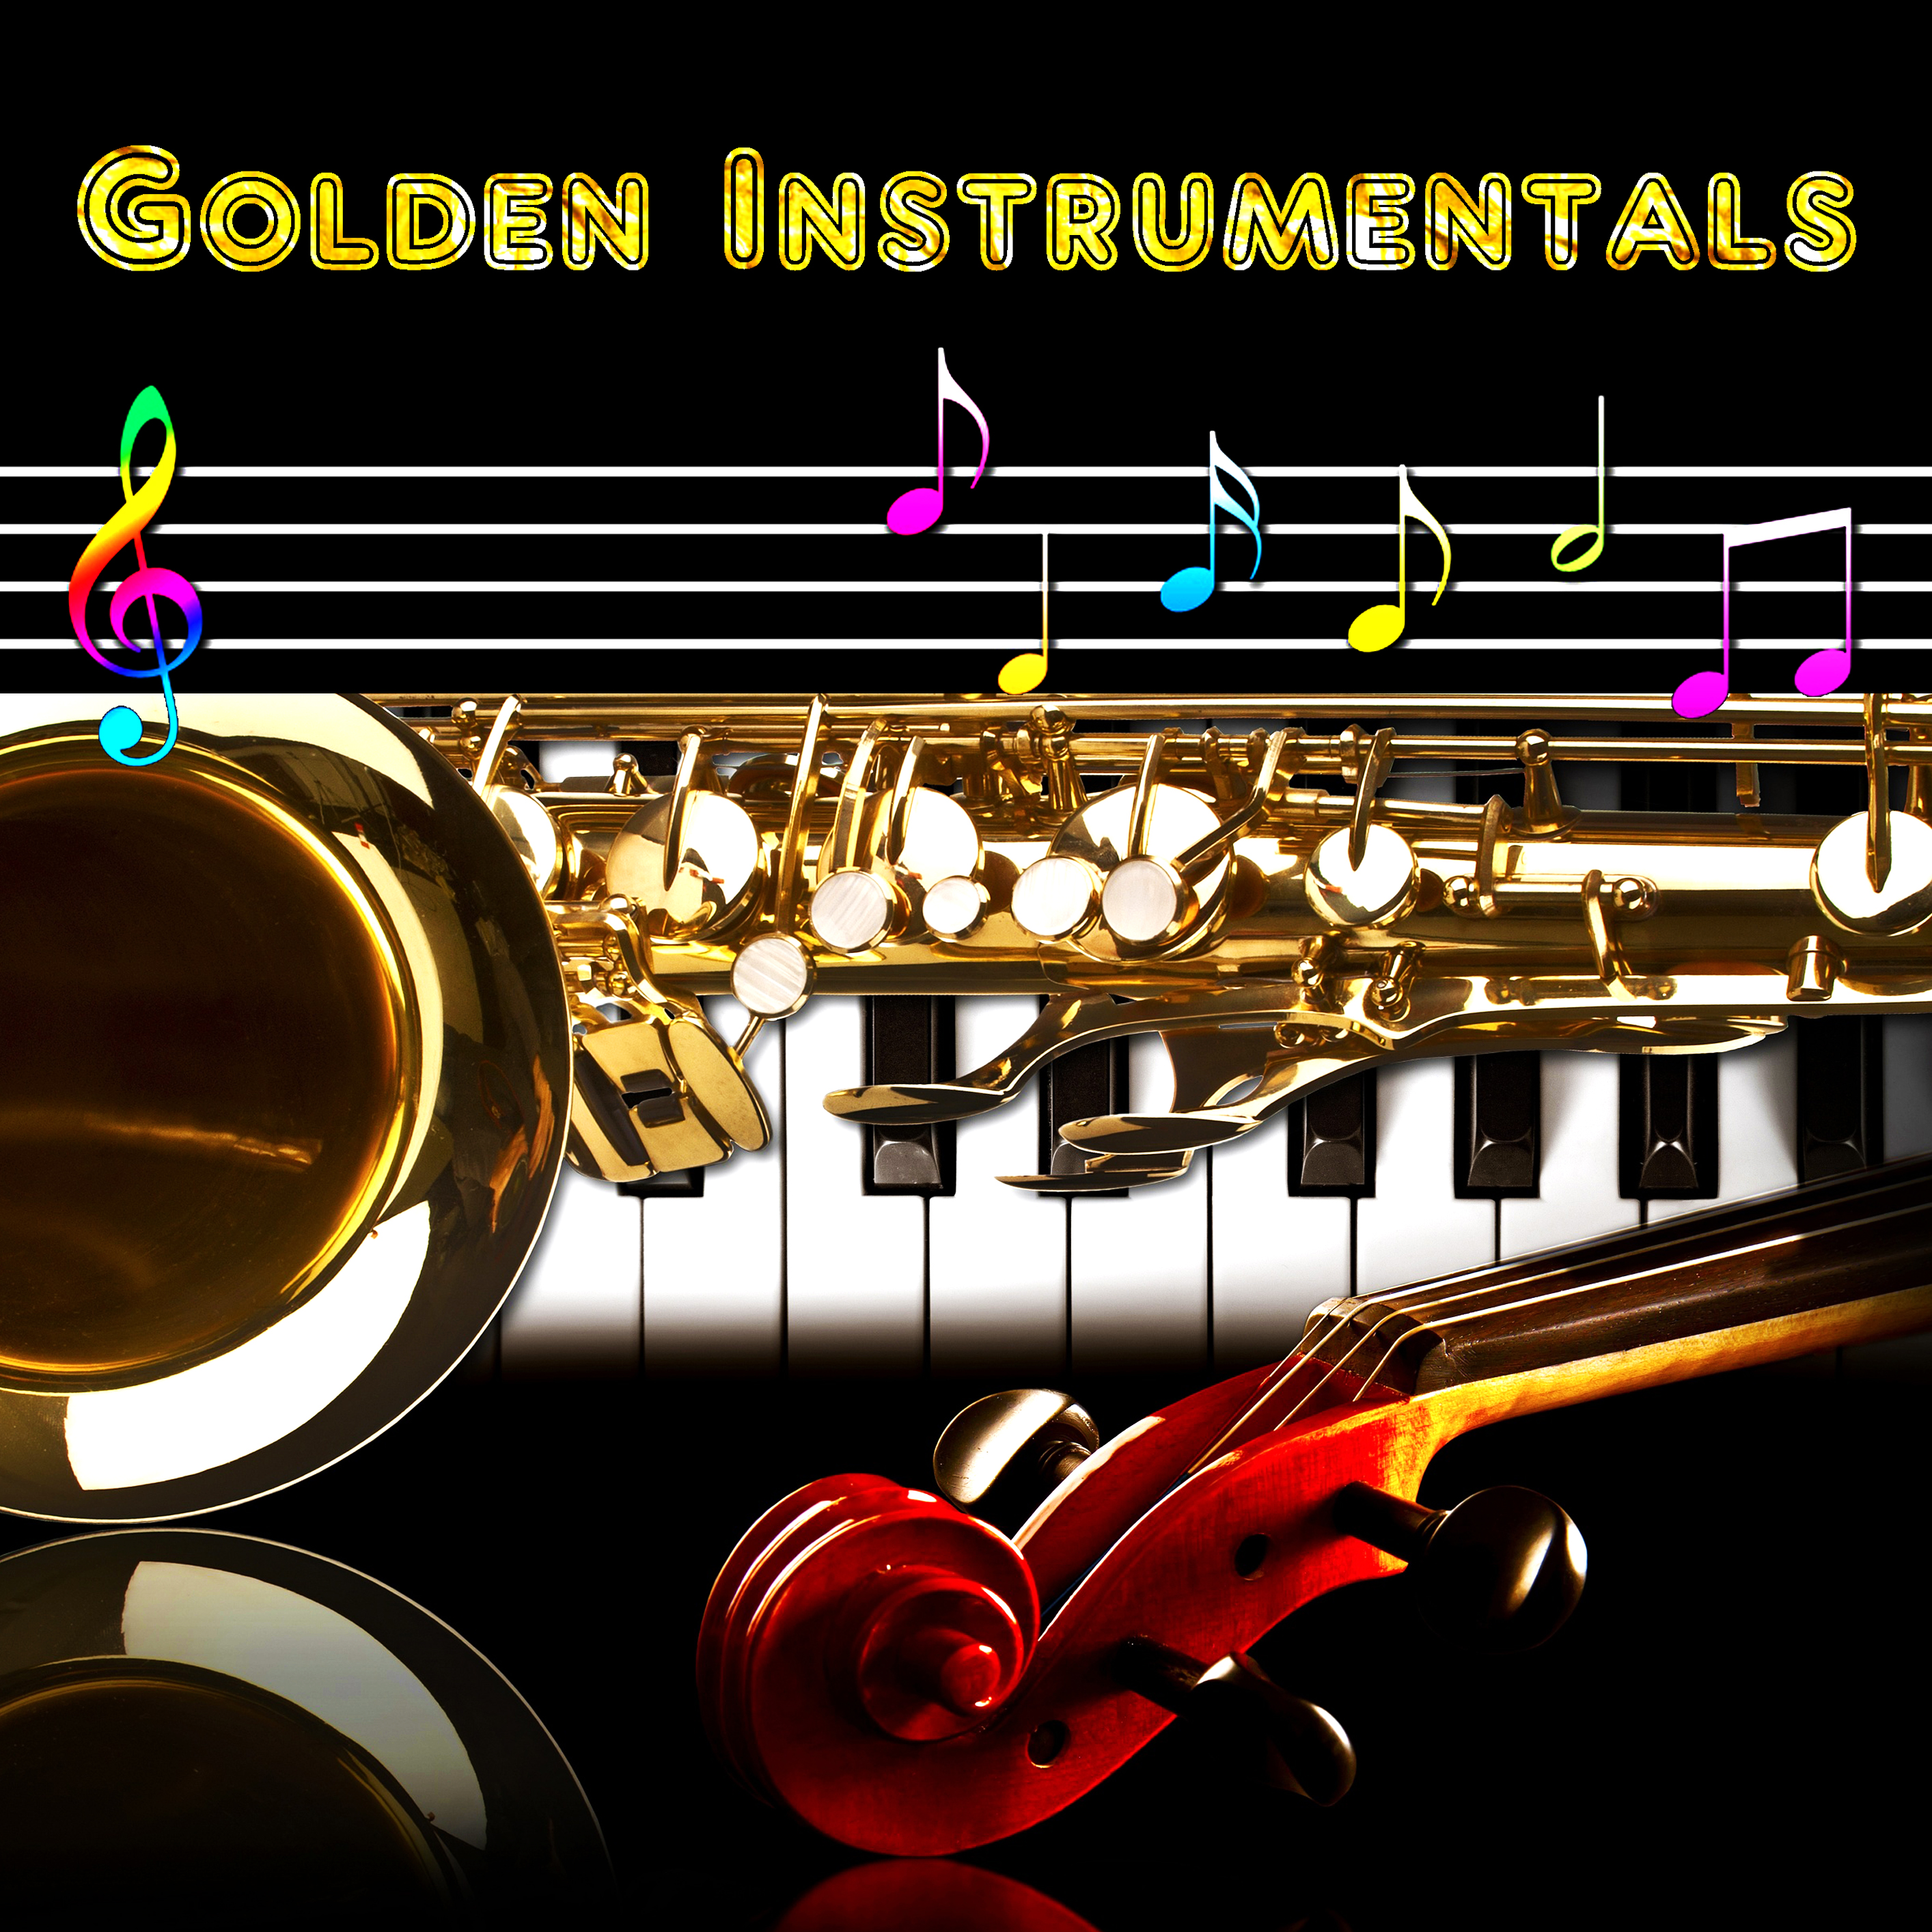 Golden Instrumentals Vol. 1 - Vol. 3 (by Art&Music)